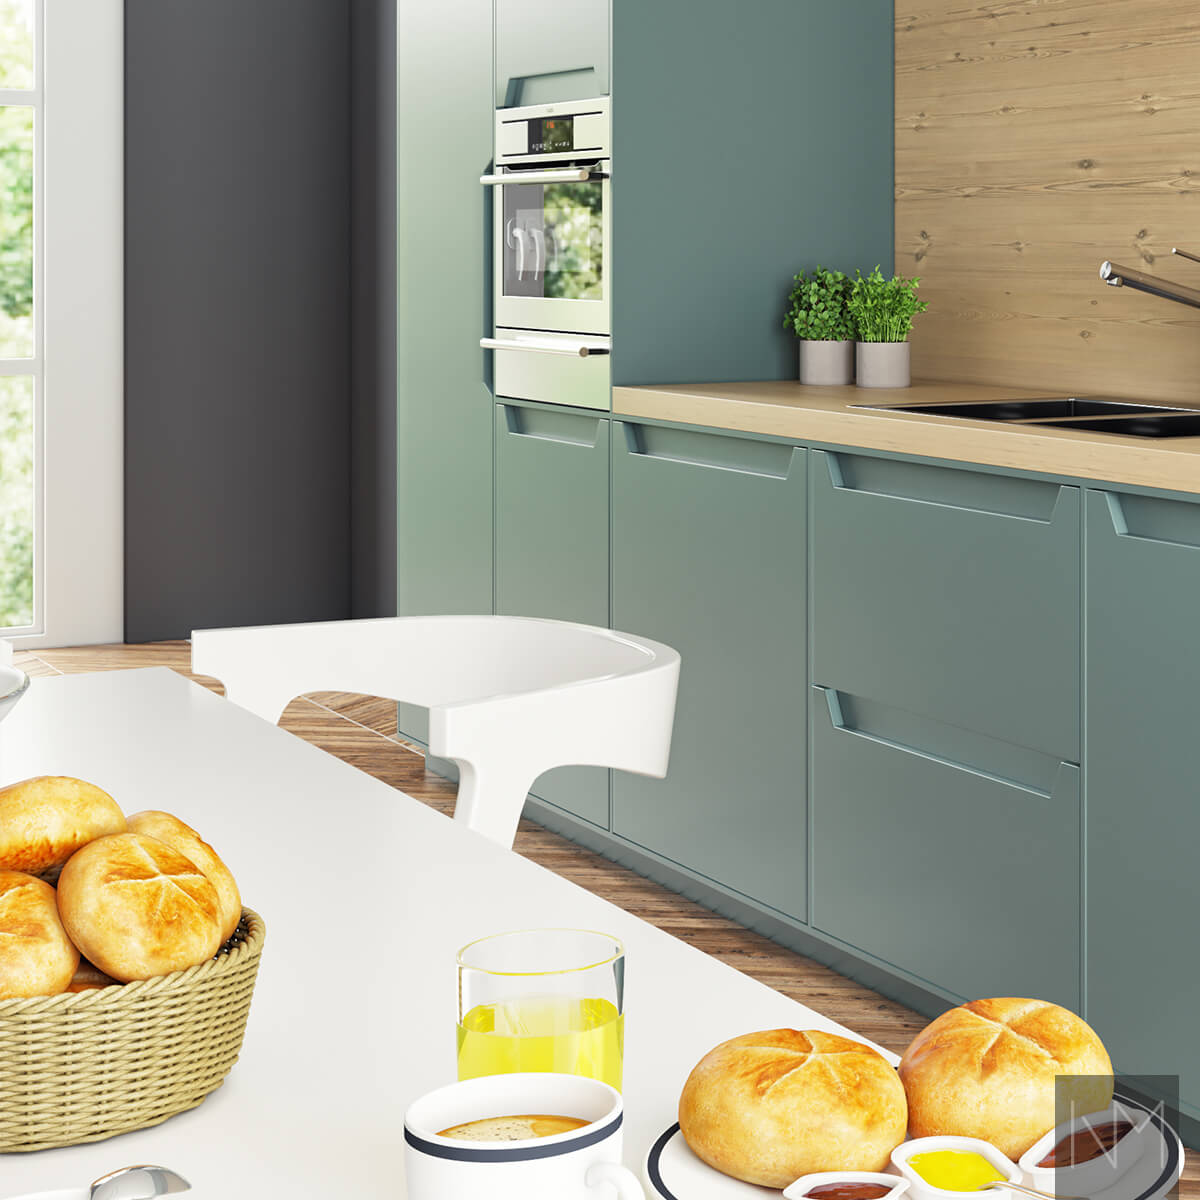 Cucina IKEA Metod o Faktum Elegance. Colore NCS 6713-B34G o Jotun Dark Teal 5454